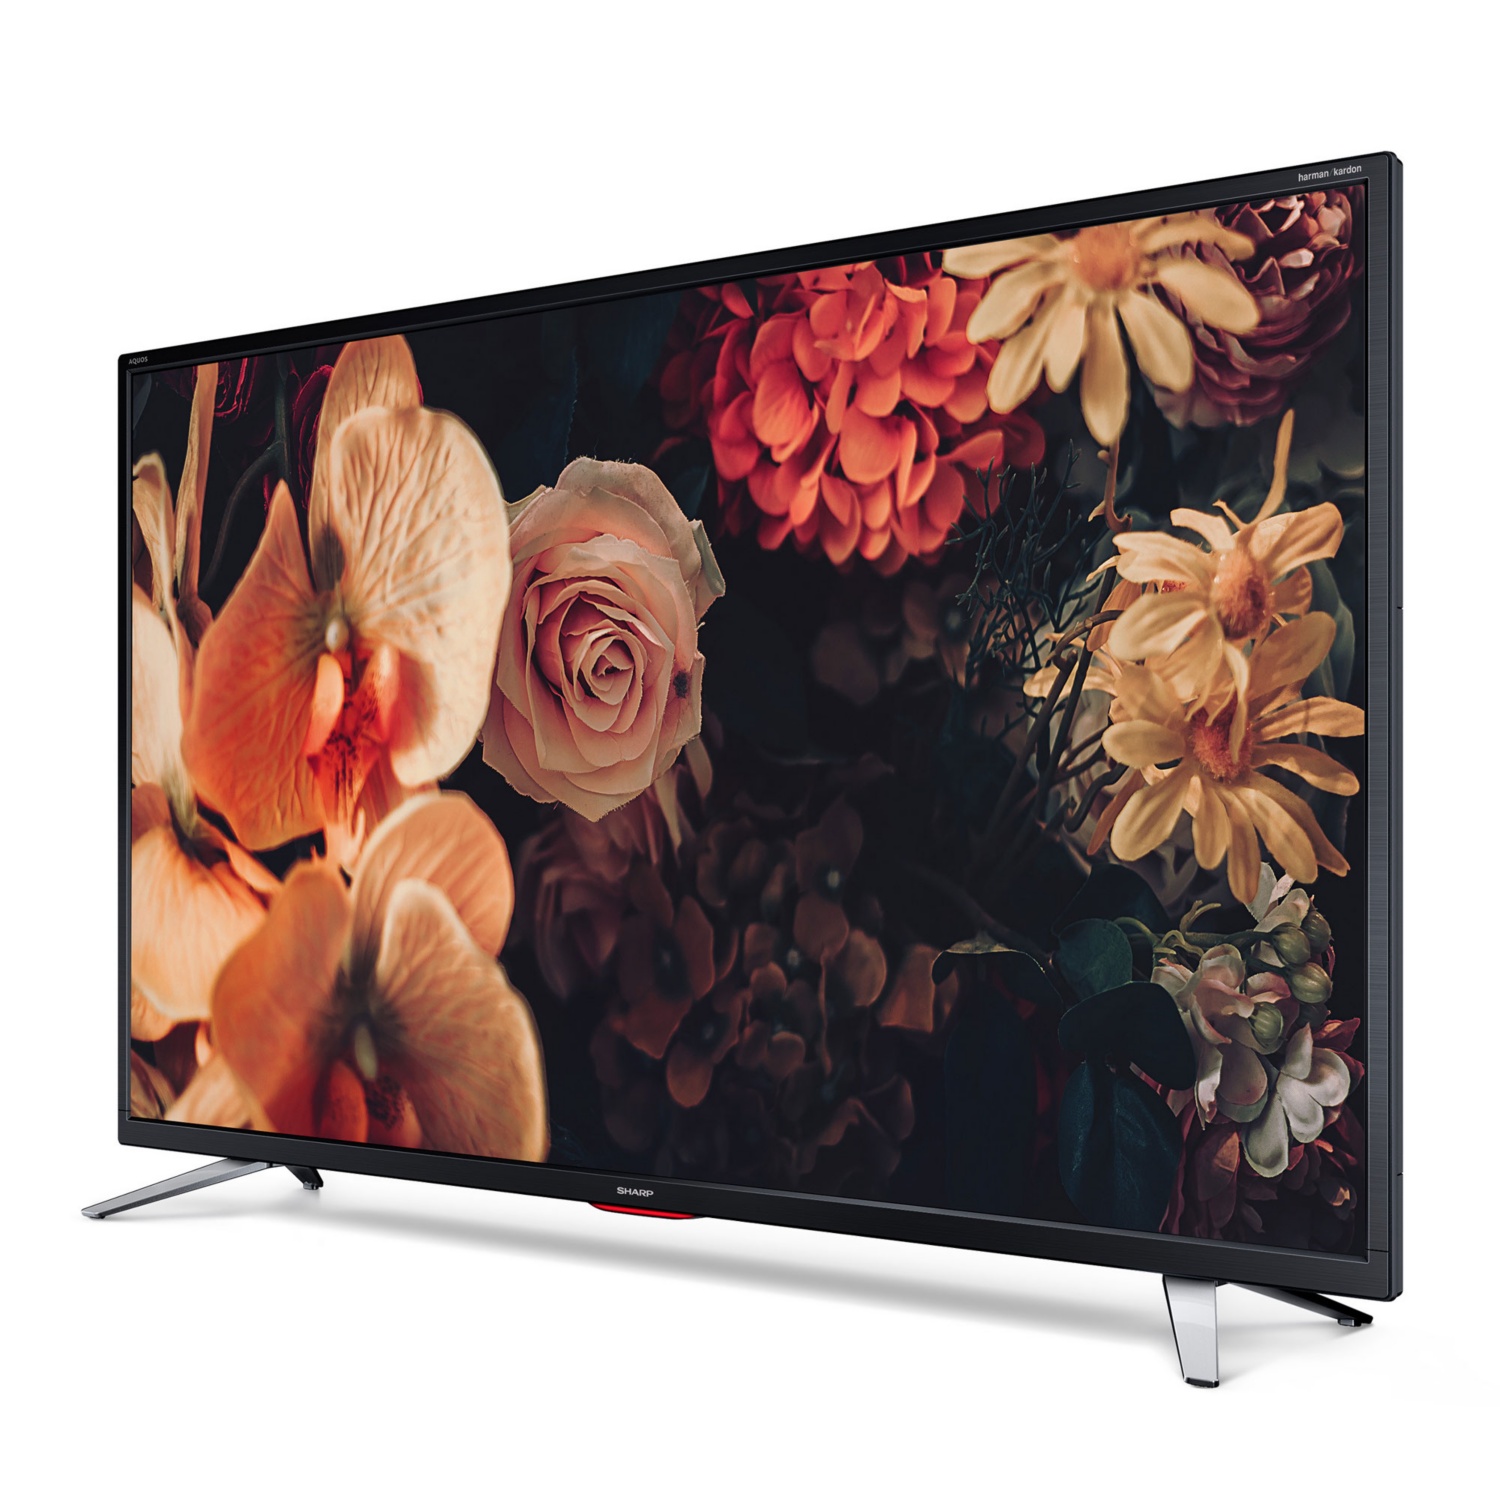 SHARP Full HD Smart-TV 42“ (106 cm) CG5E